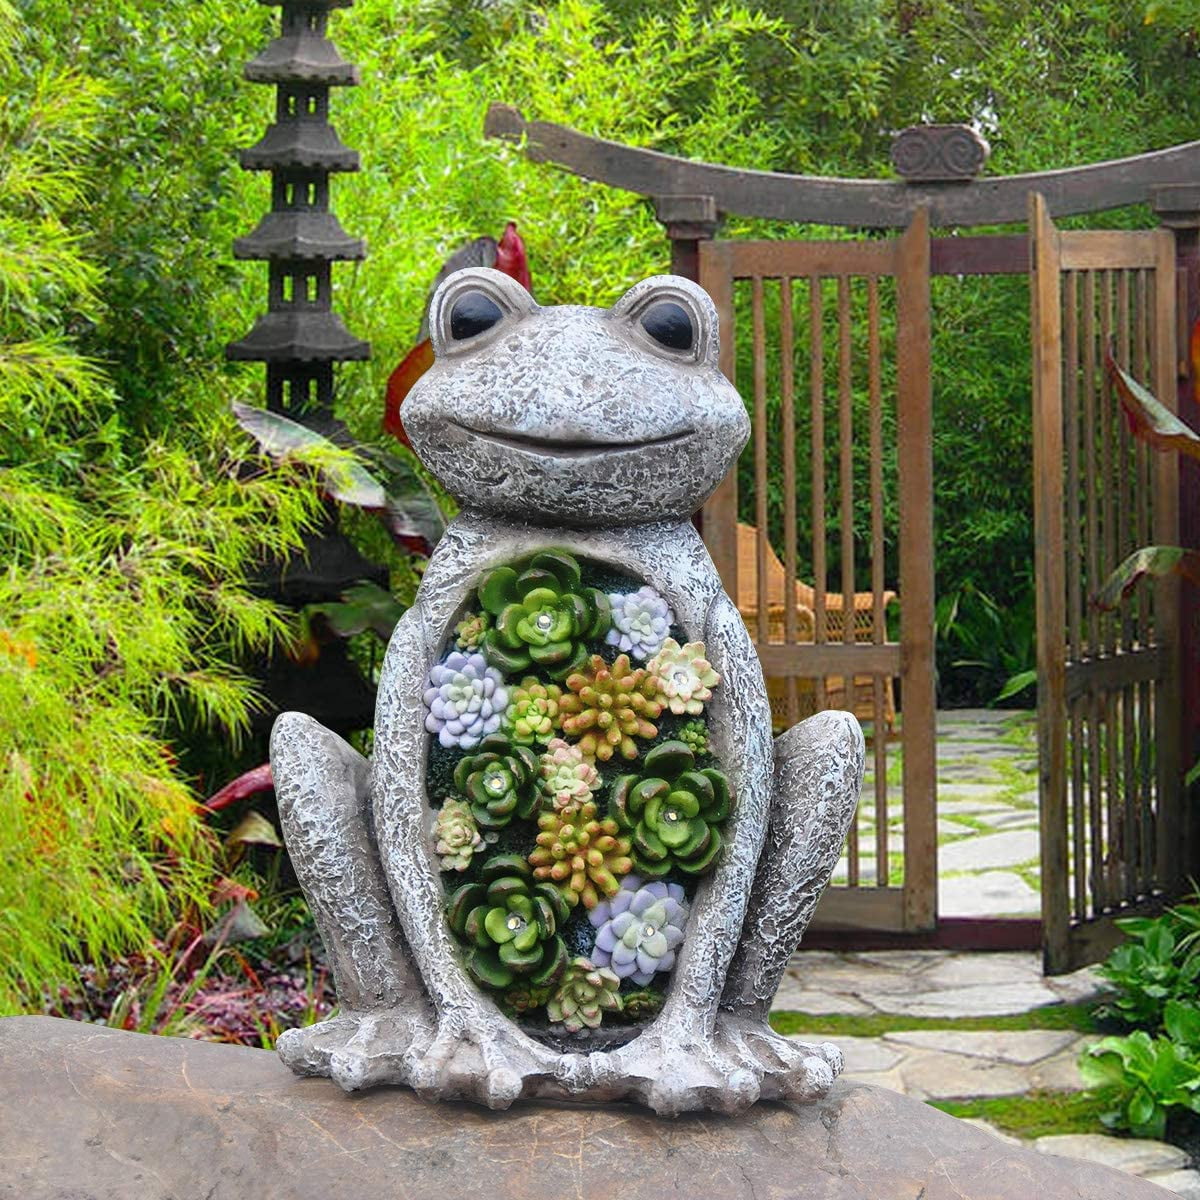 Cute Frog Statue Resin Figurines Sculpture Artwork for Home Garden Art Decor 